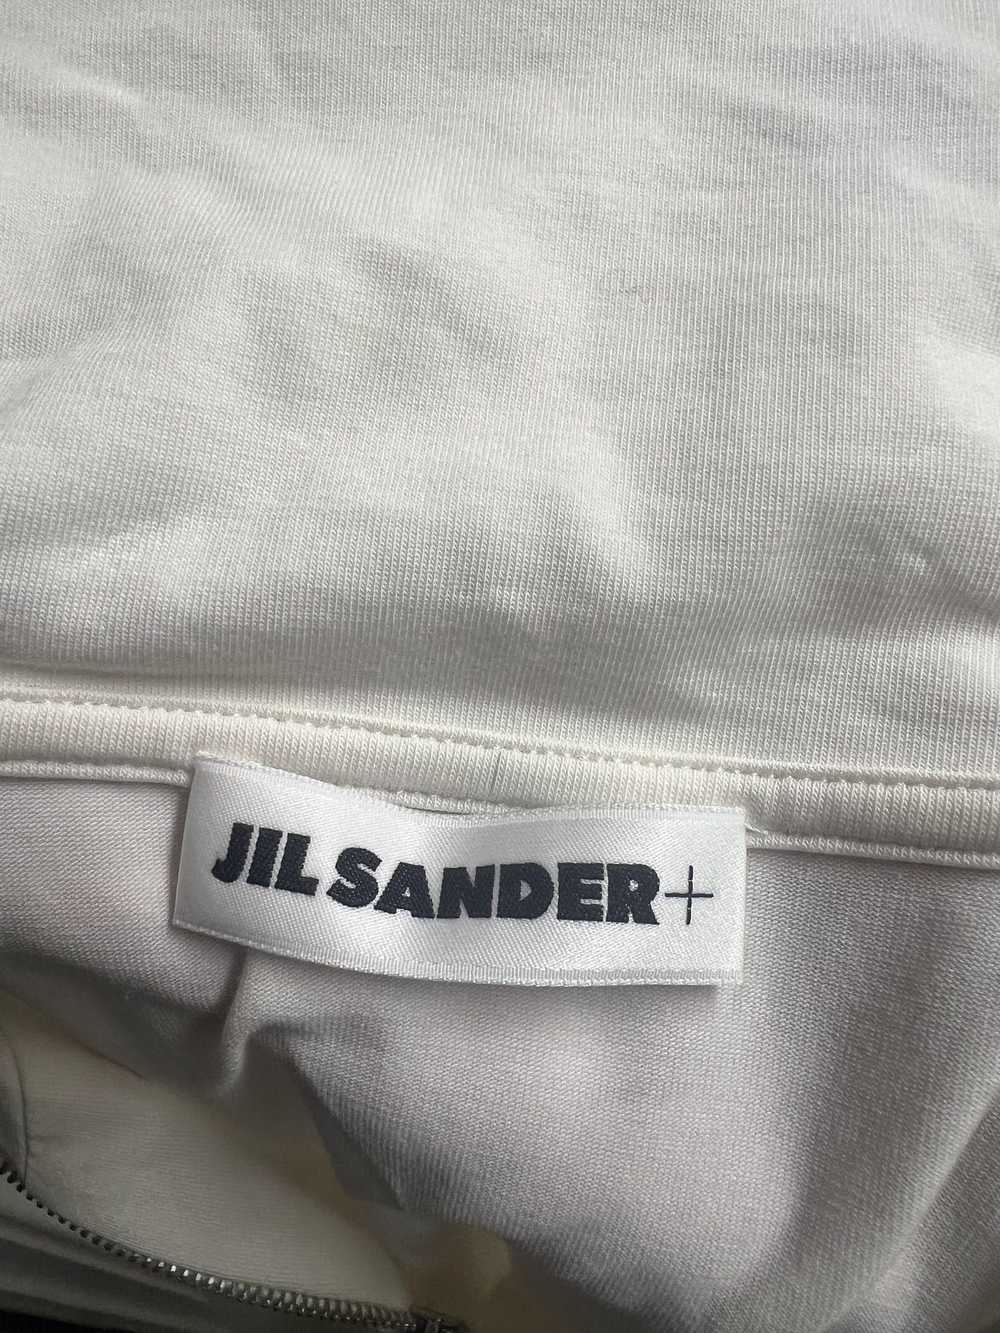 Jil Sander White Cotton Quarter-Zip Turtleneck - image 4